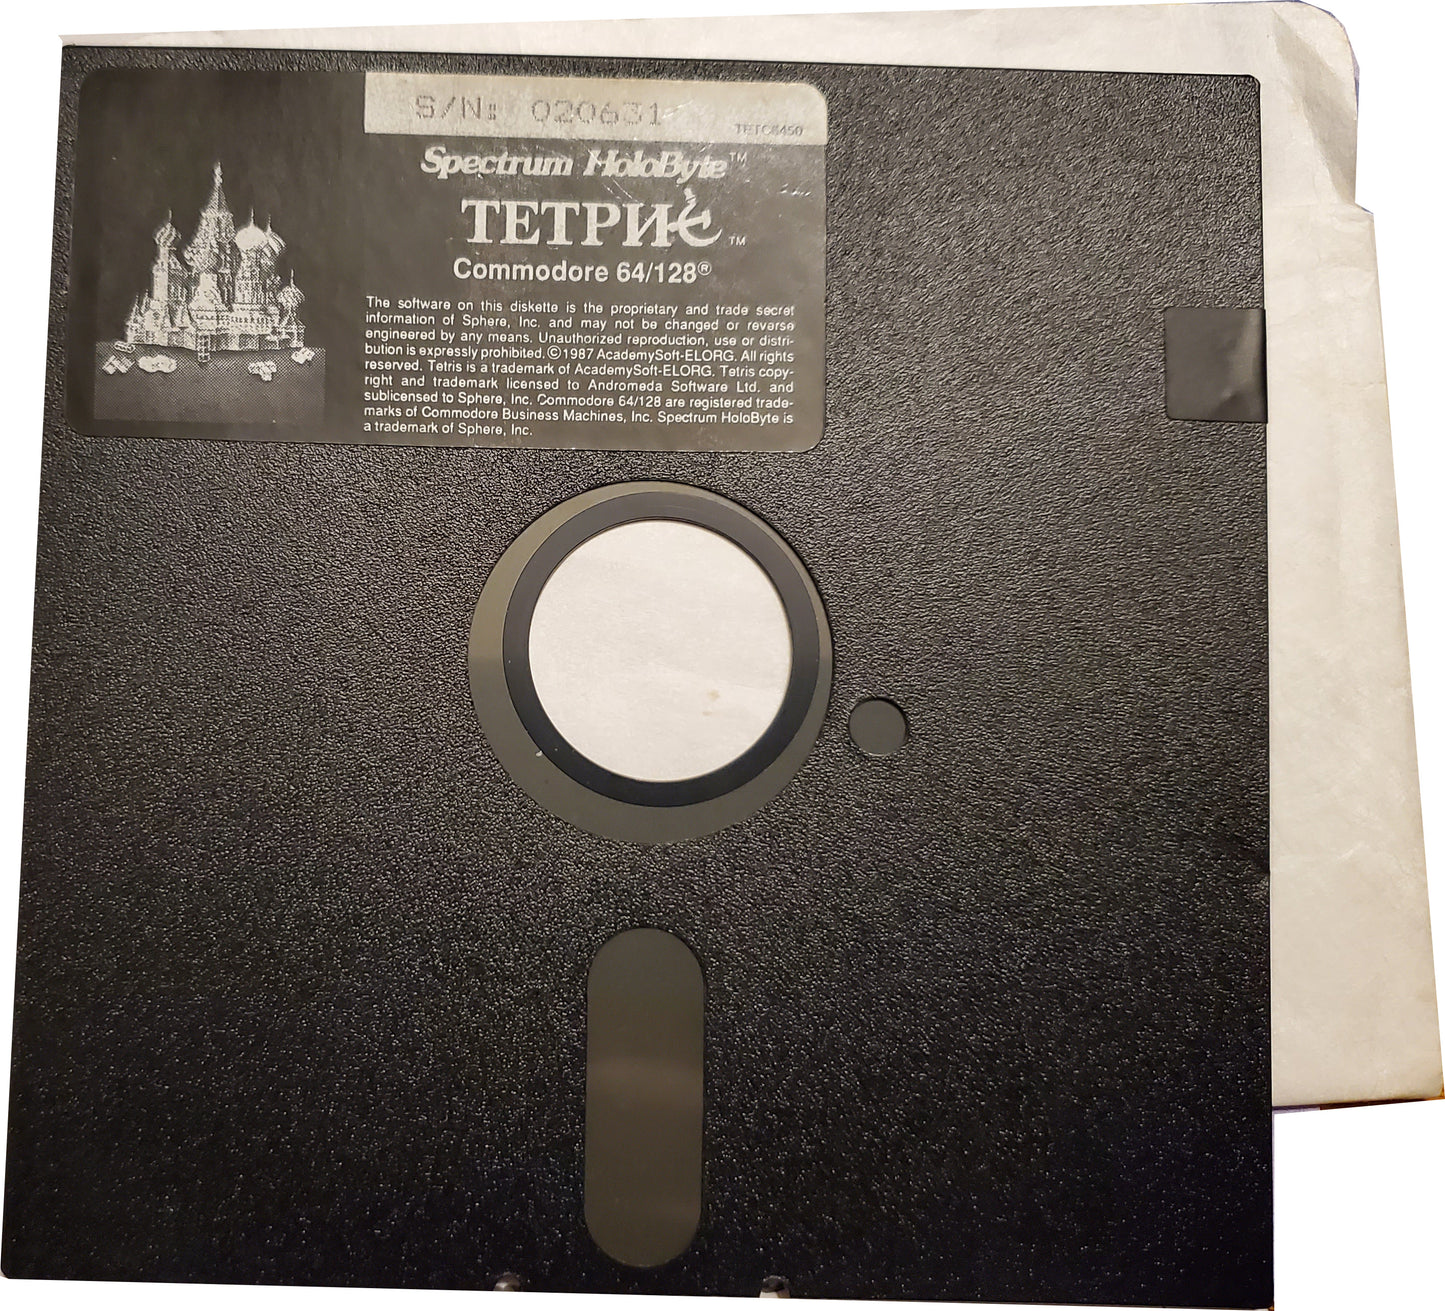 Tetris in box for the Commodore 64